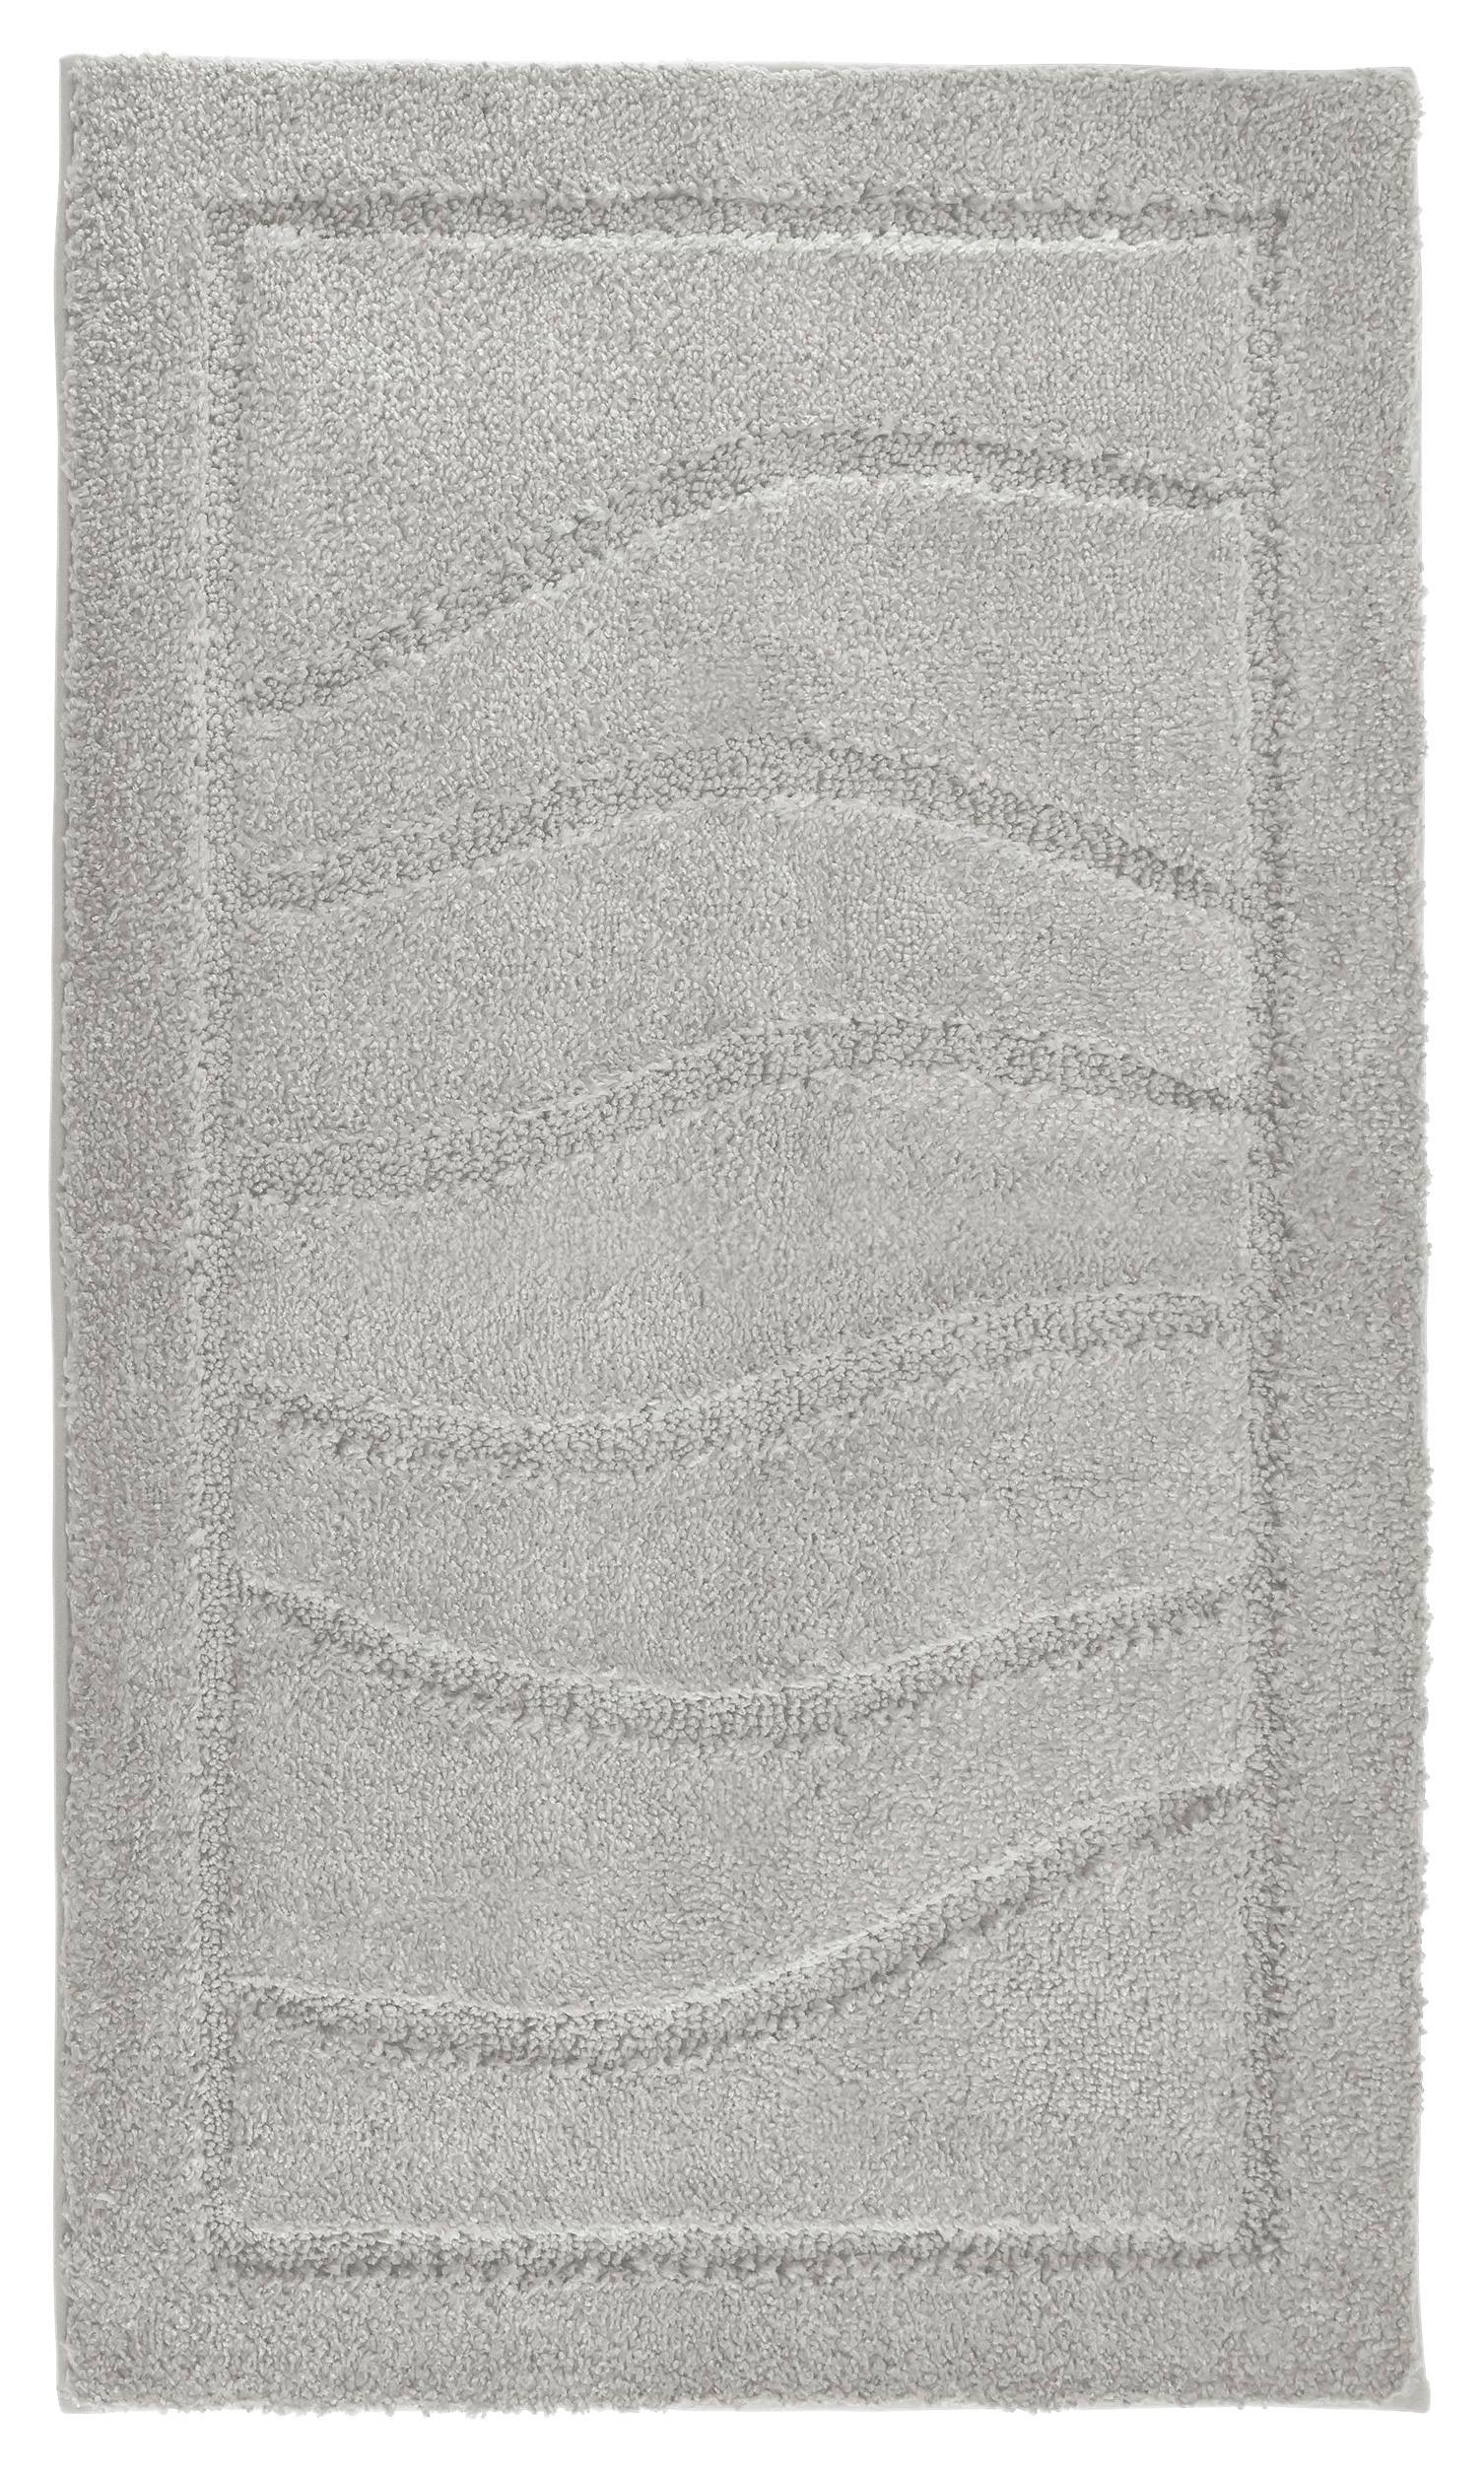 Badematte Lasse Grau 60x100 cm Rutschhemmend - Hellgrau, ROMANTIK / LANDHAUS, Textil (60/100cm) - James Wood